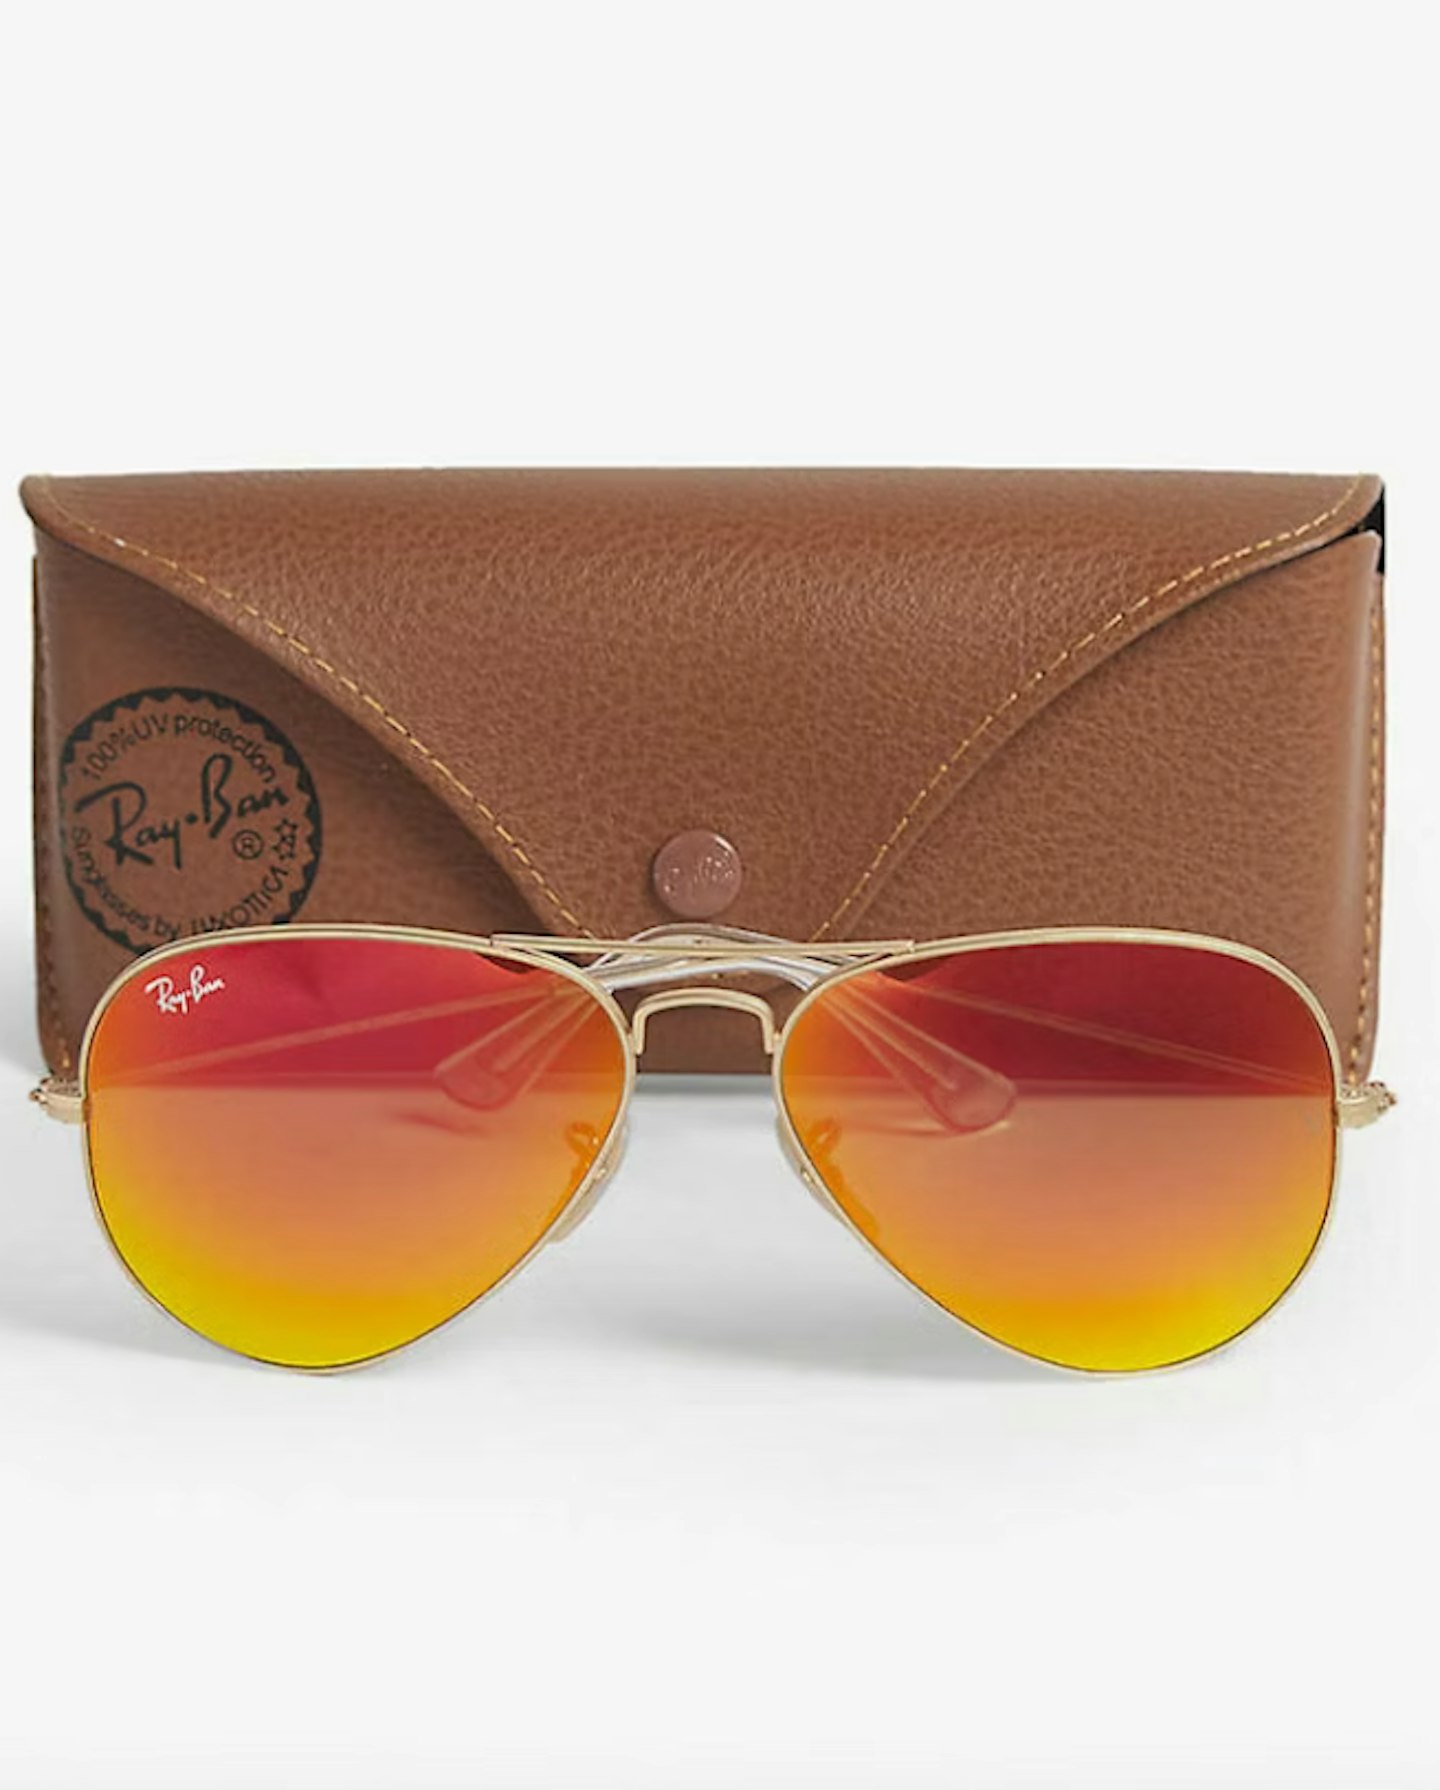 Ray-Ban Orange Sunglasses